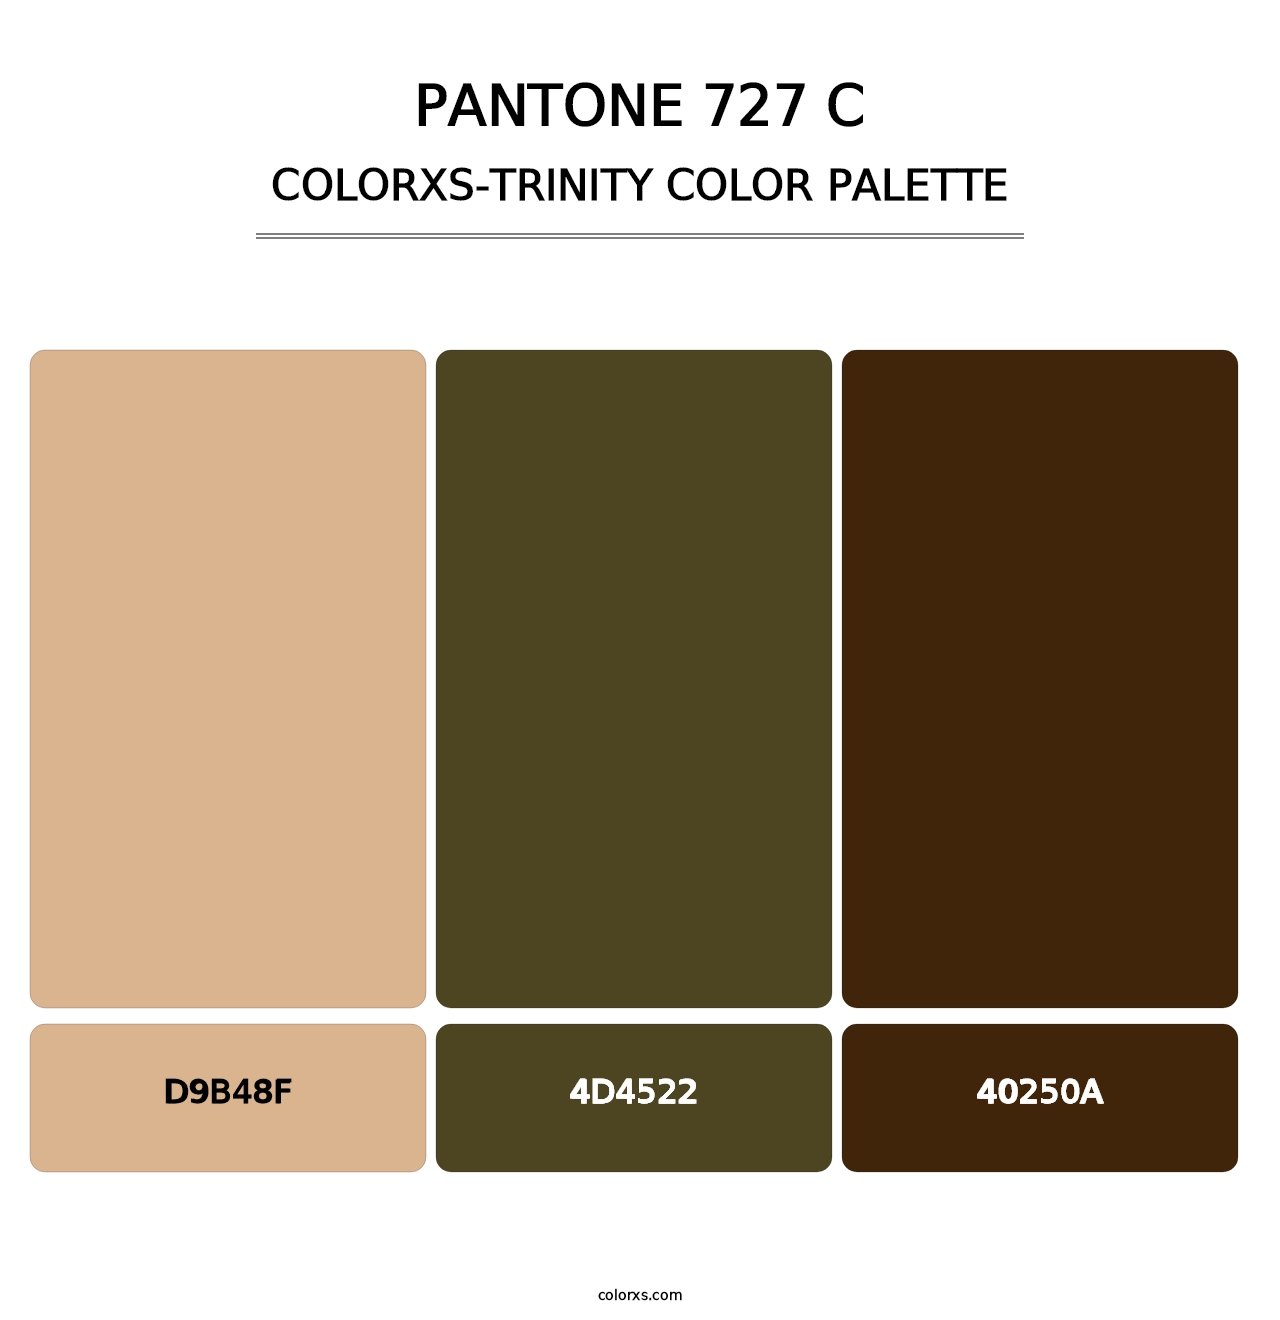 PANTONE 727 C - Colorxs Trinity Palette